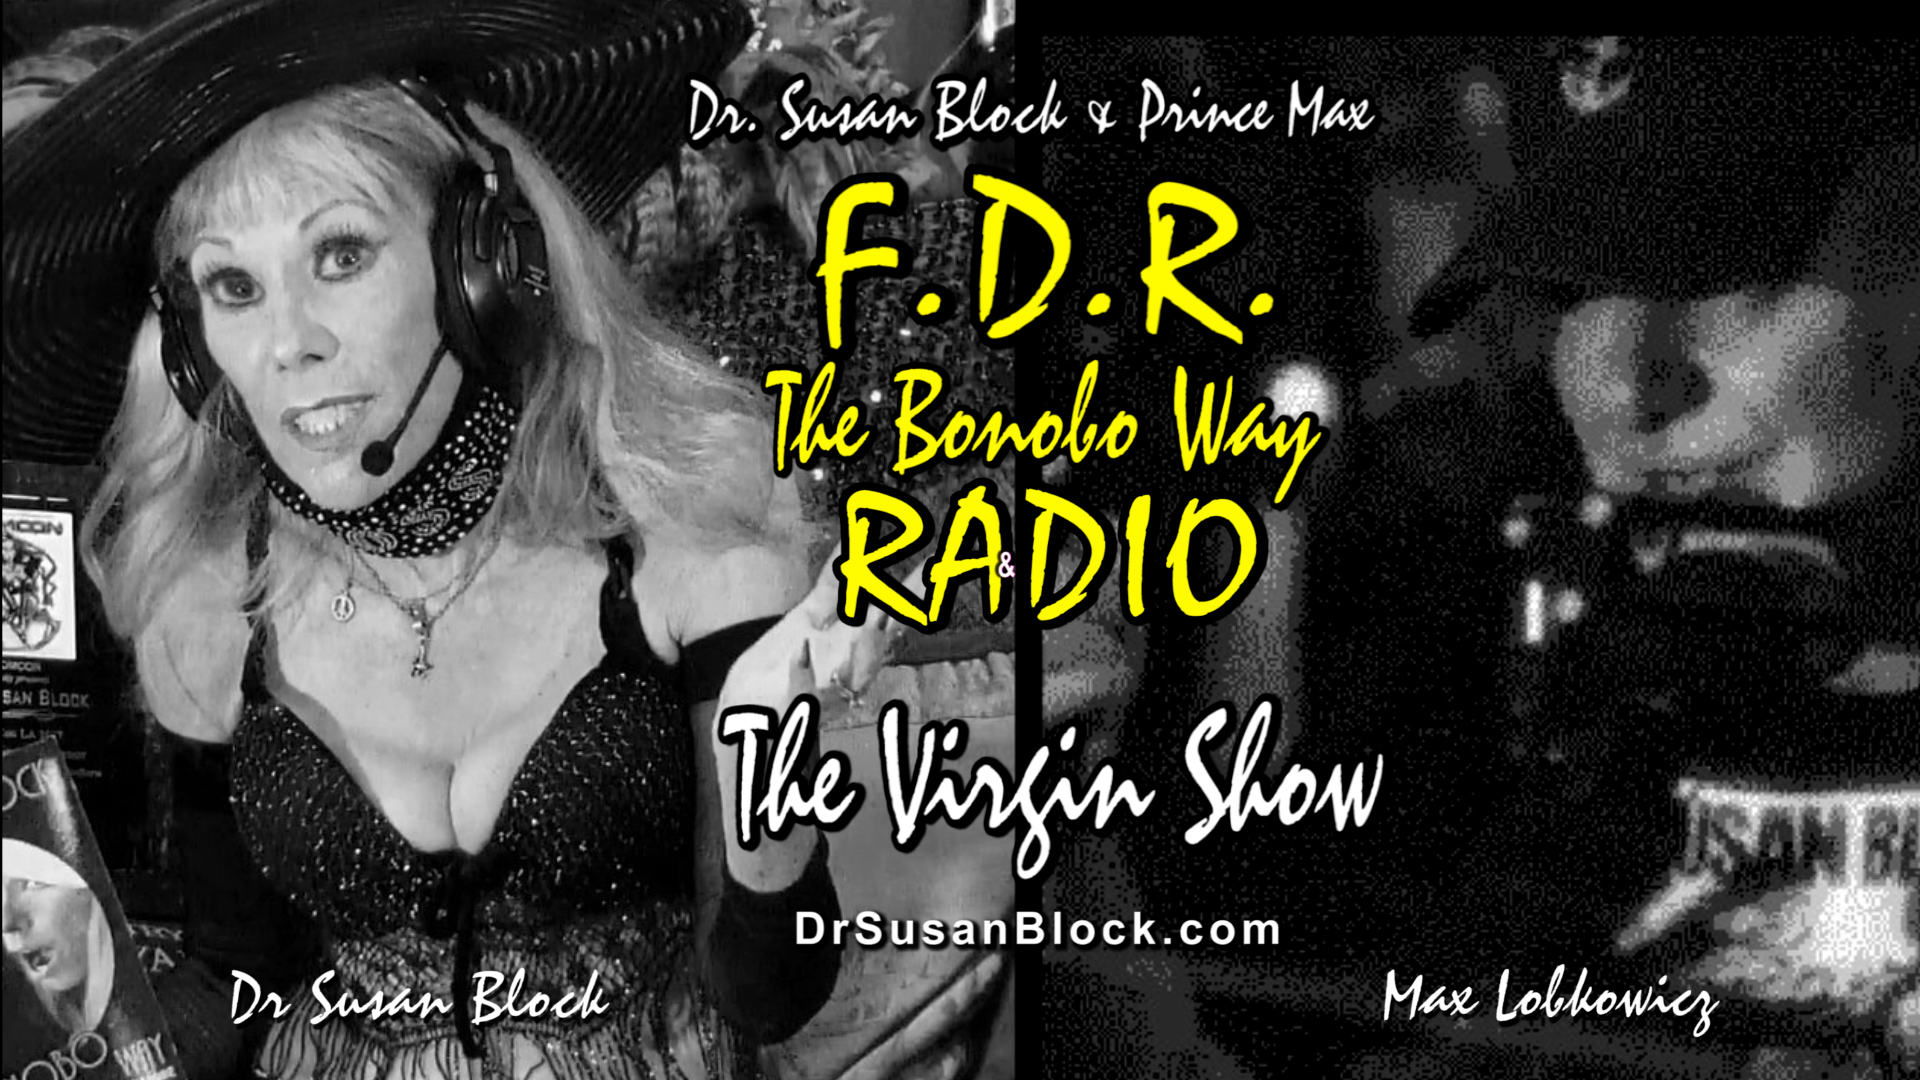 F.D.R: The Virgin Show